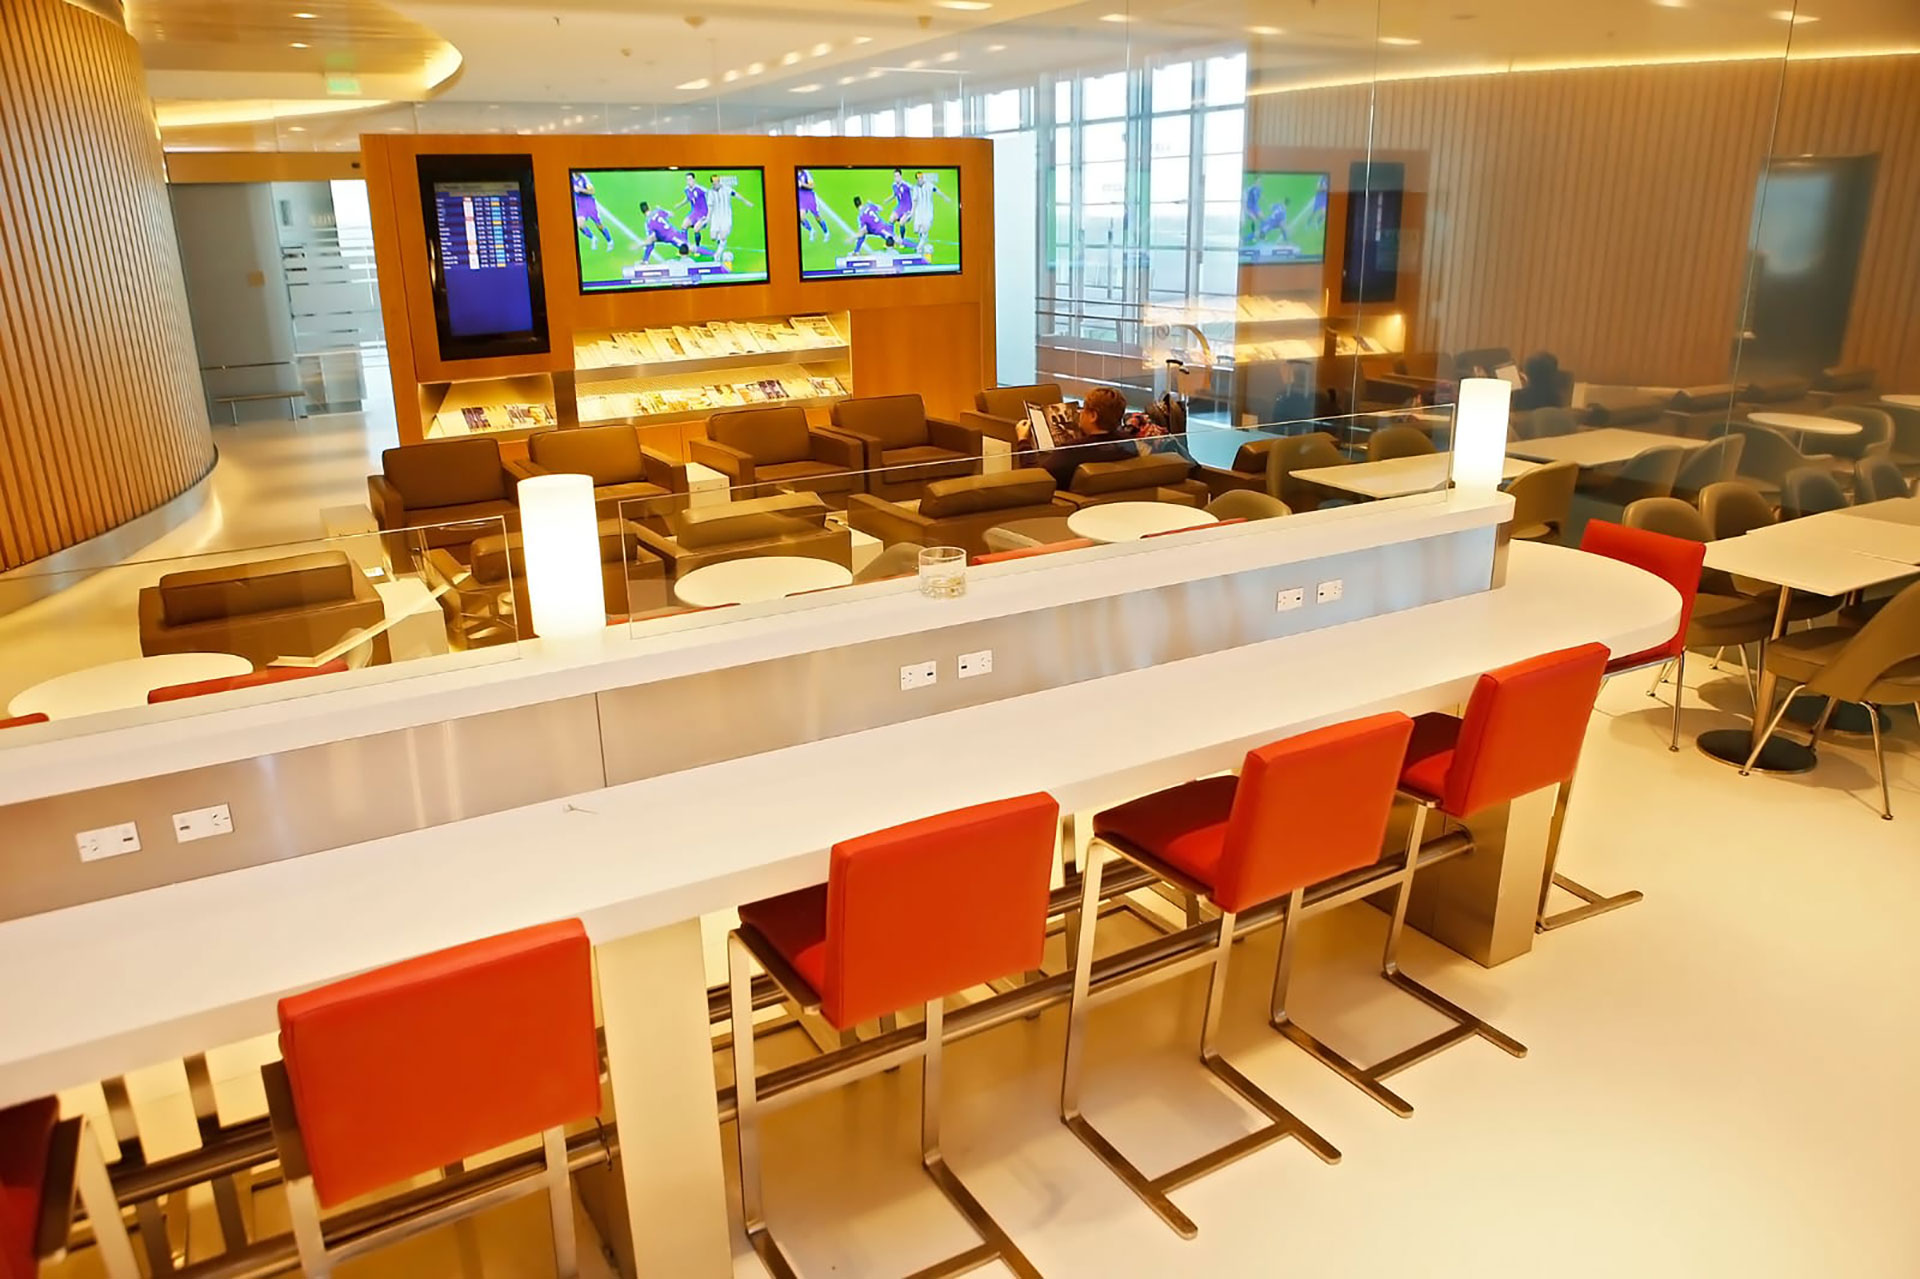 El American Airlines Admirals Club & Iberia VIP Lounge: está ubicado en el nivel superior frente a la puerta número 9